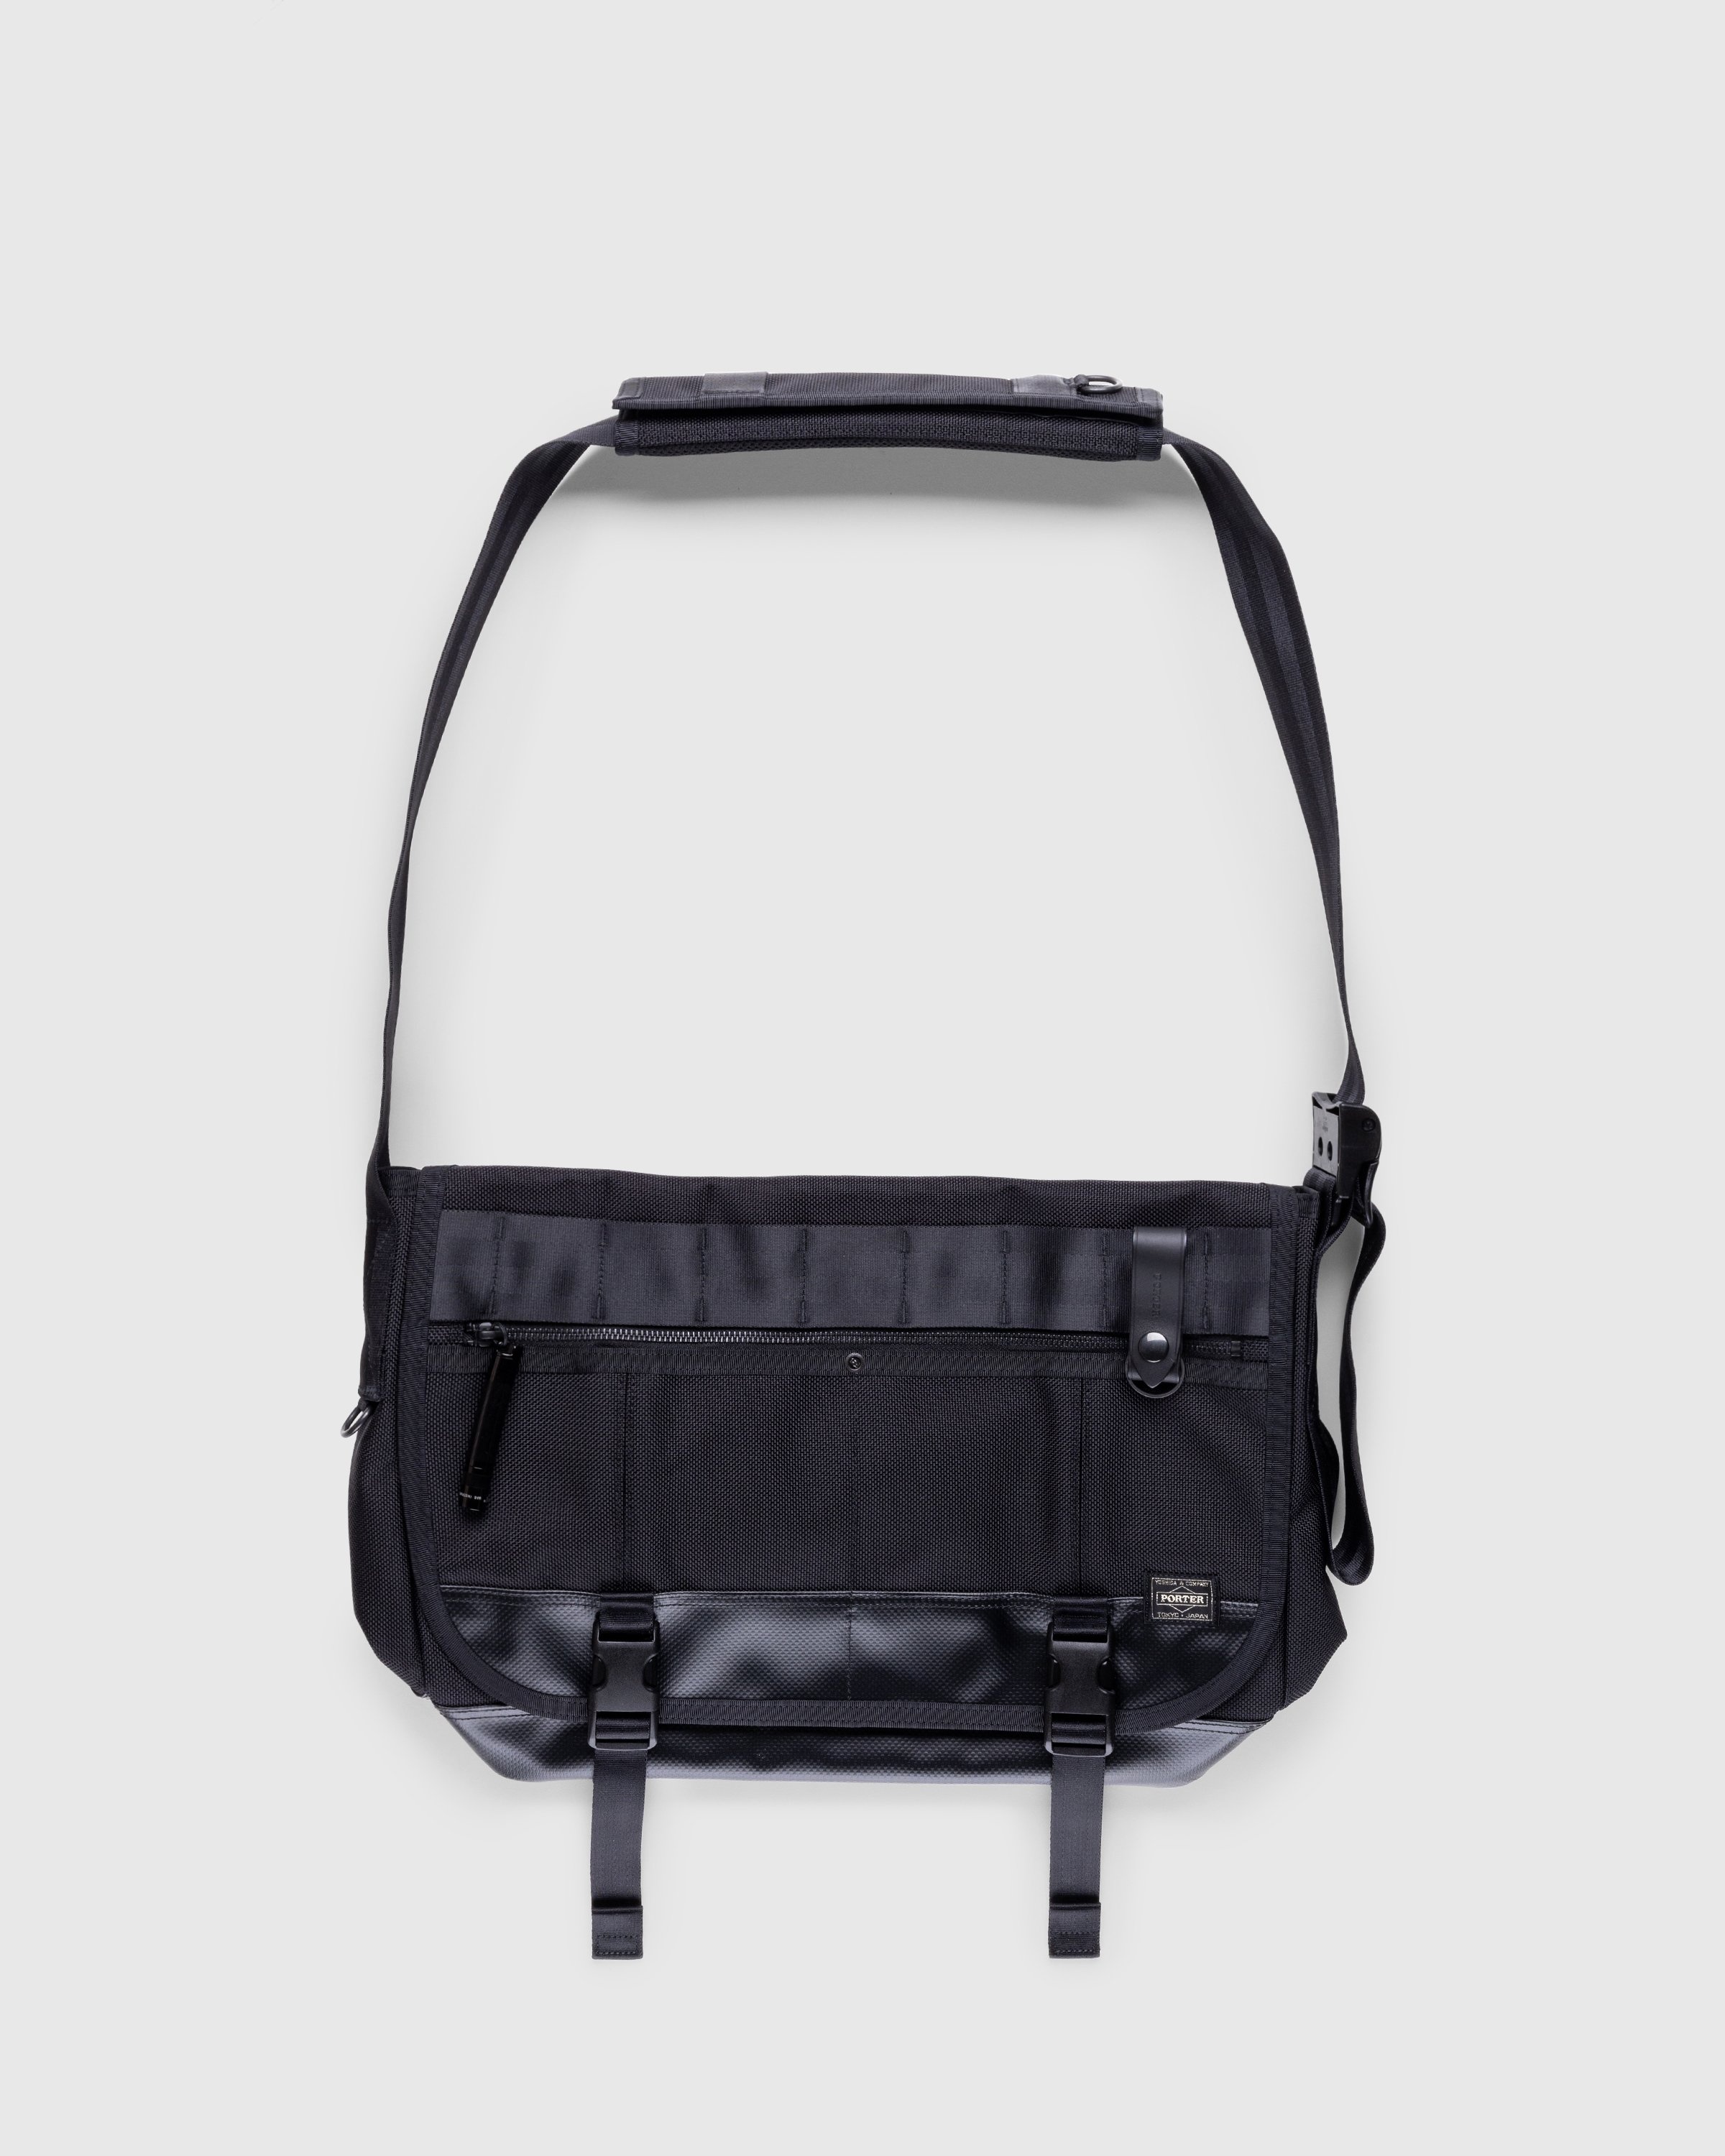 Porter-Yoshida & Co. – Heat Messenger Bag Black | Highsnobiety Shop